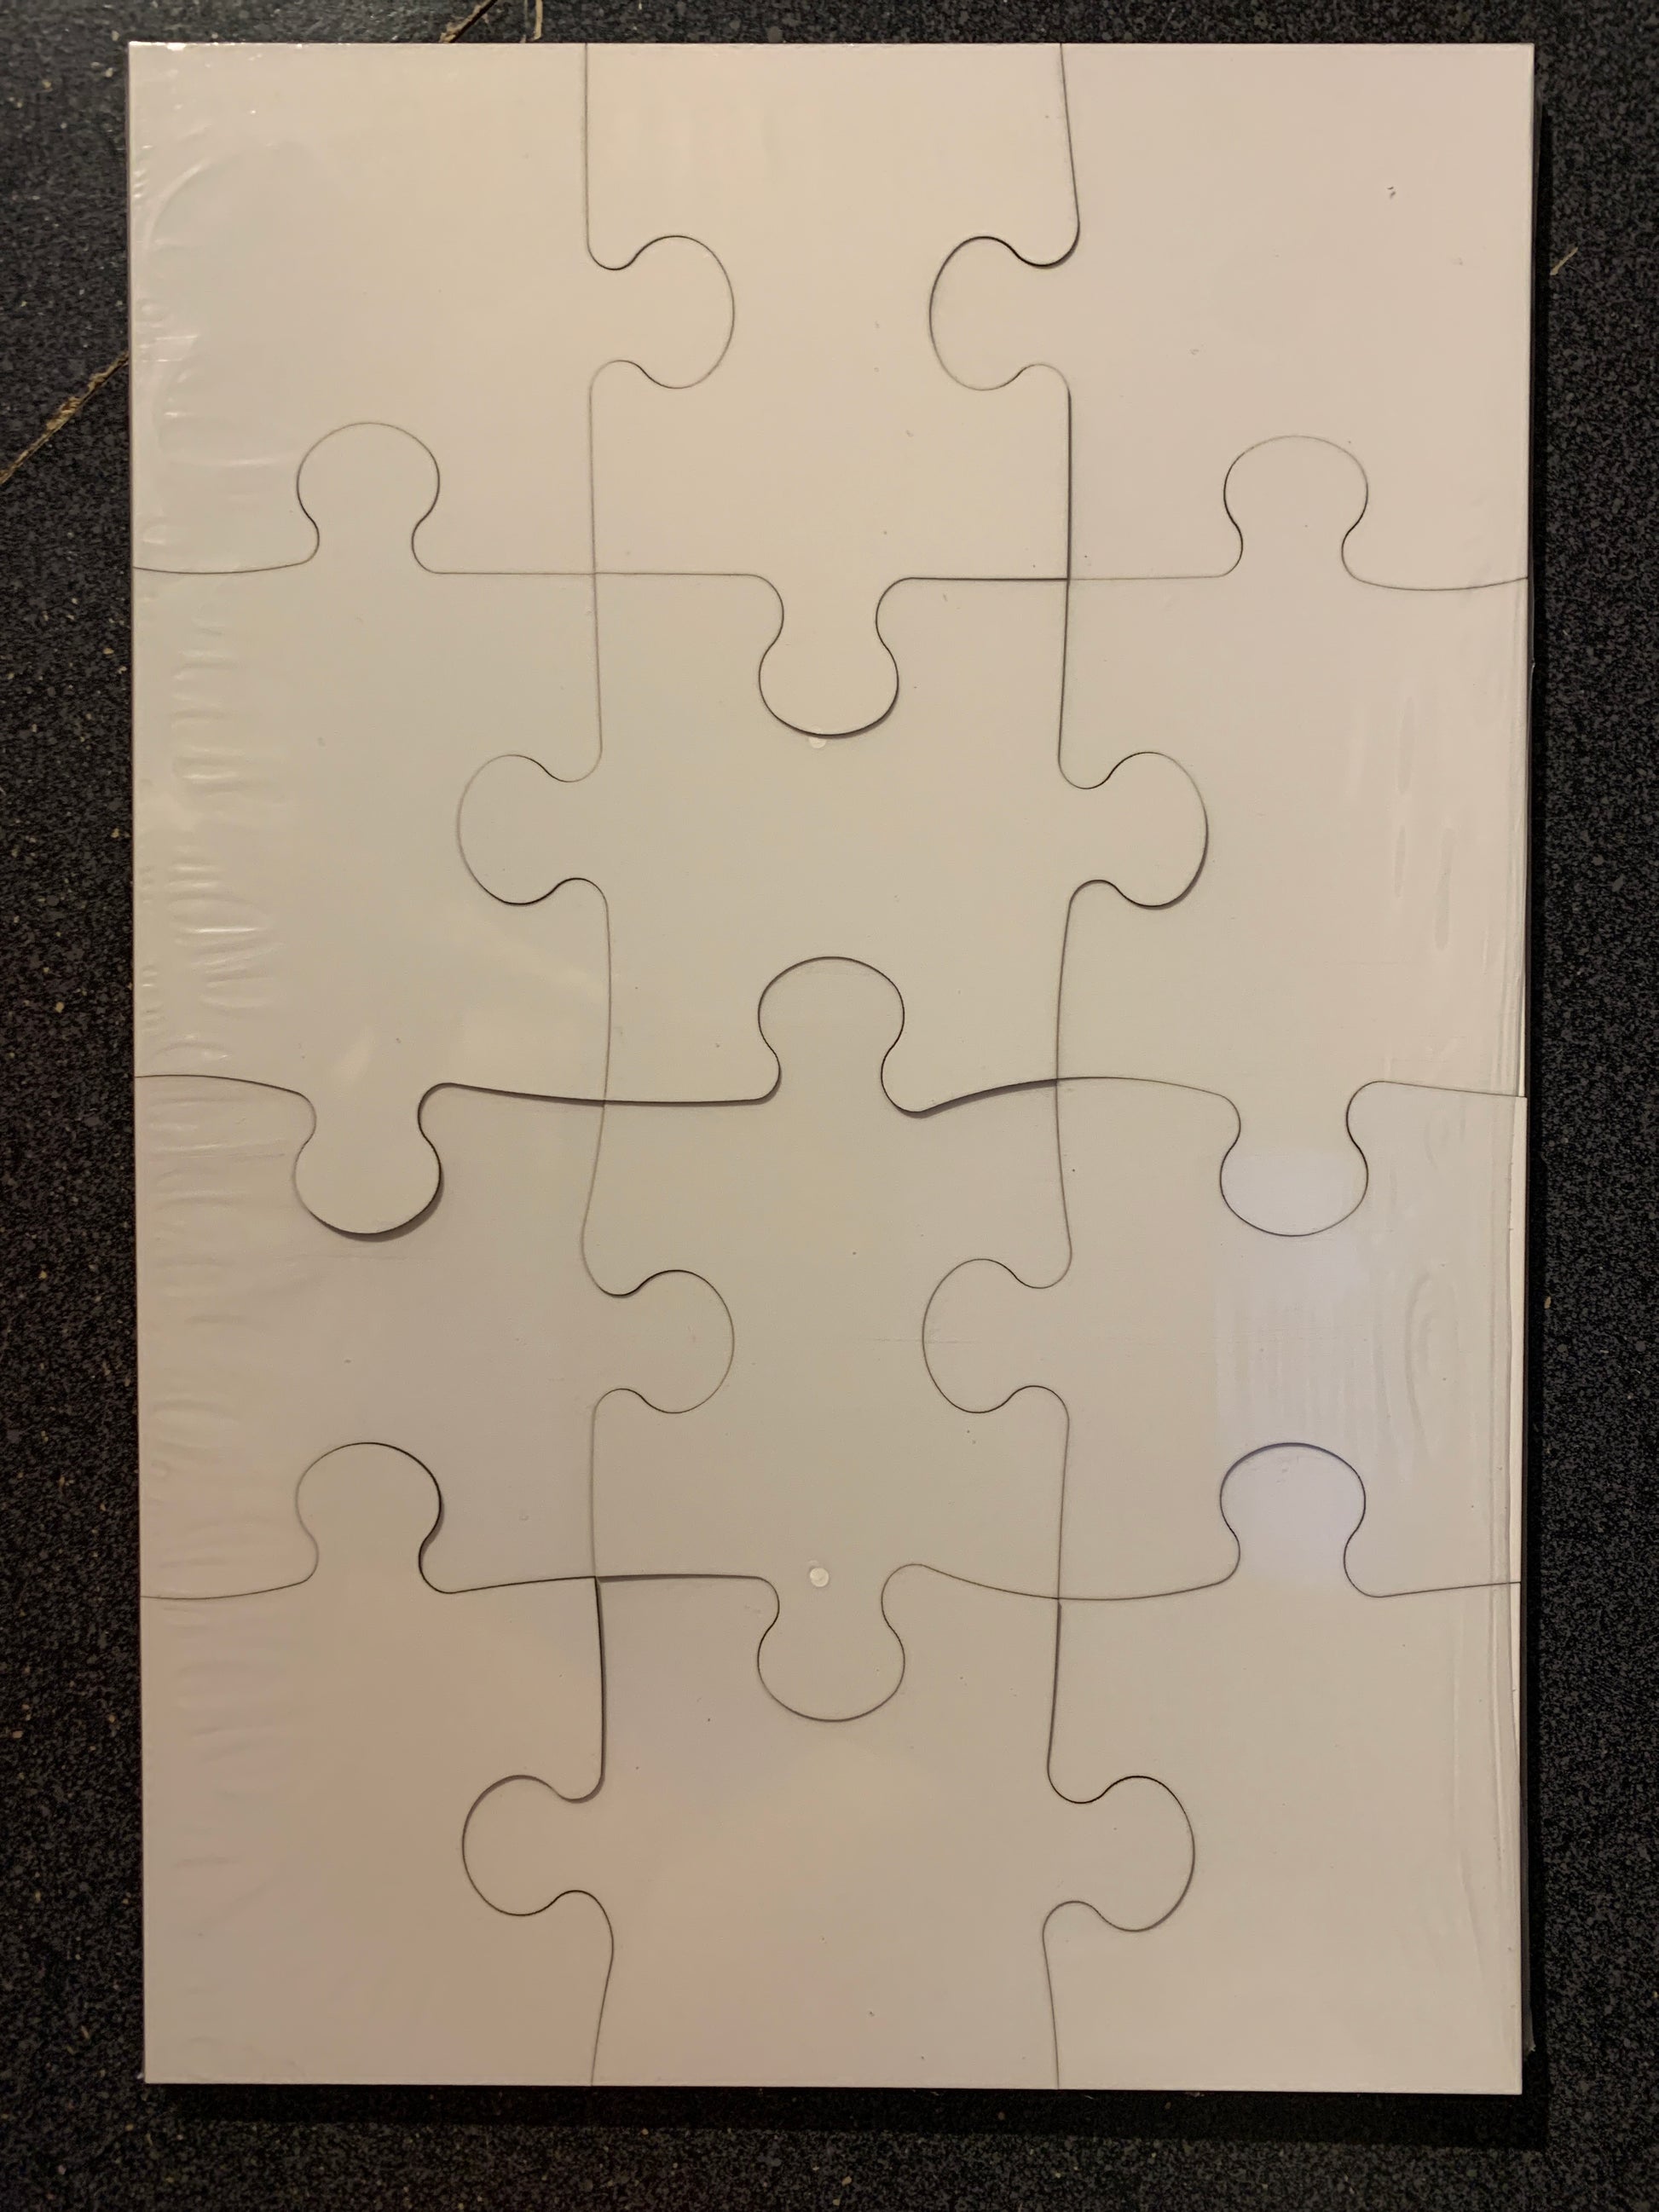 12-Piece Puzzle Sublimation Blank